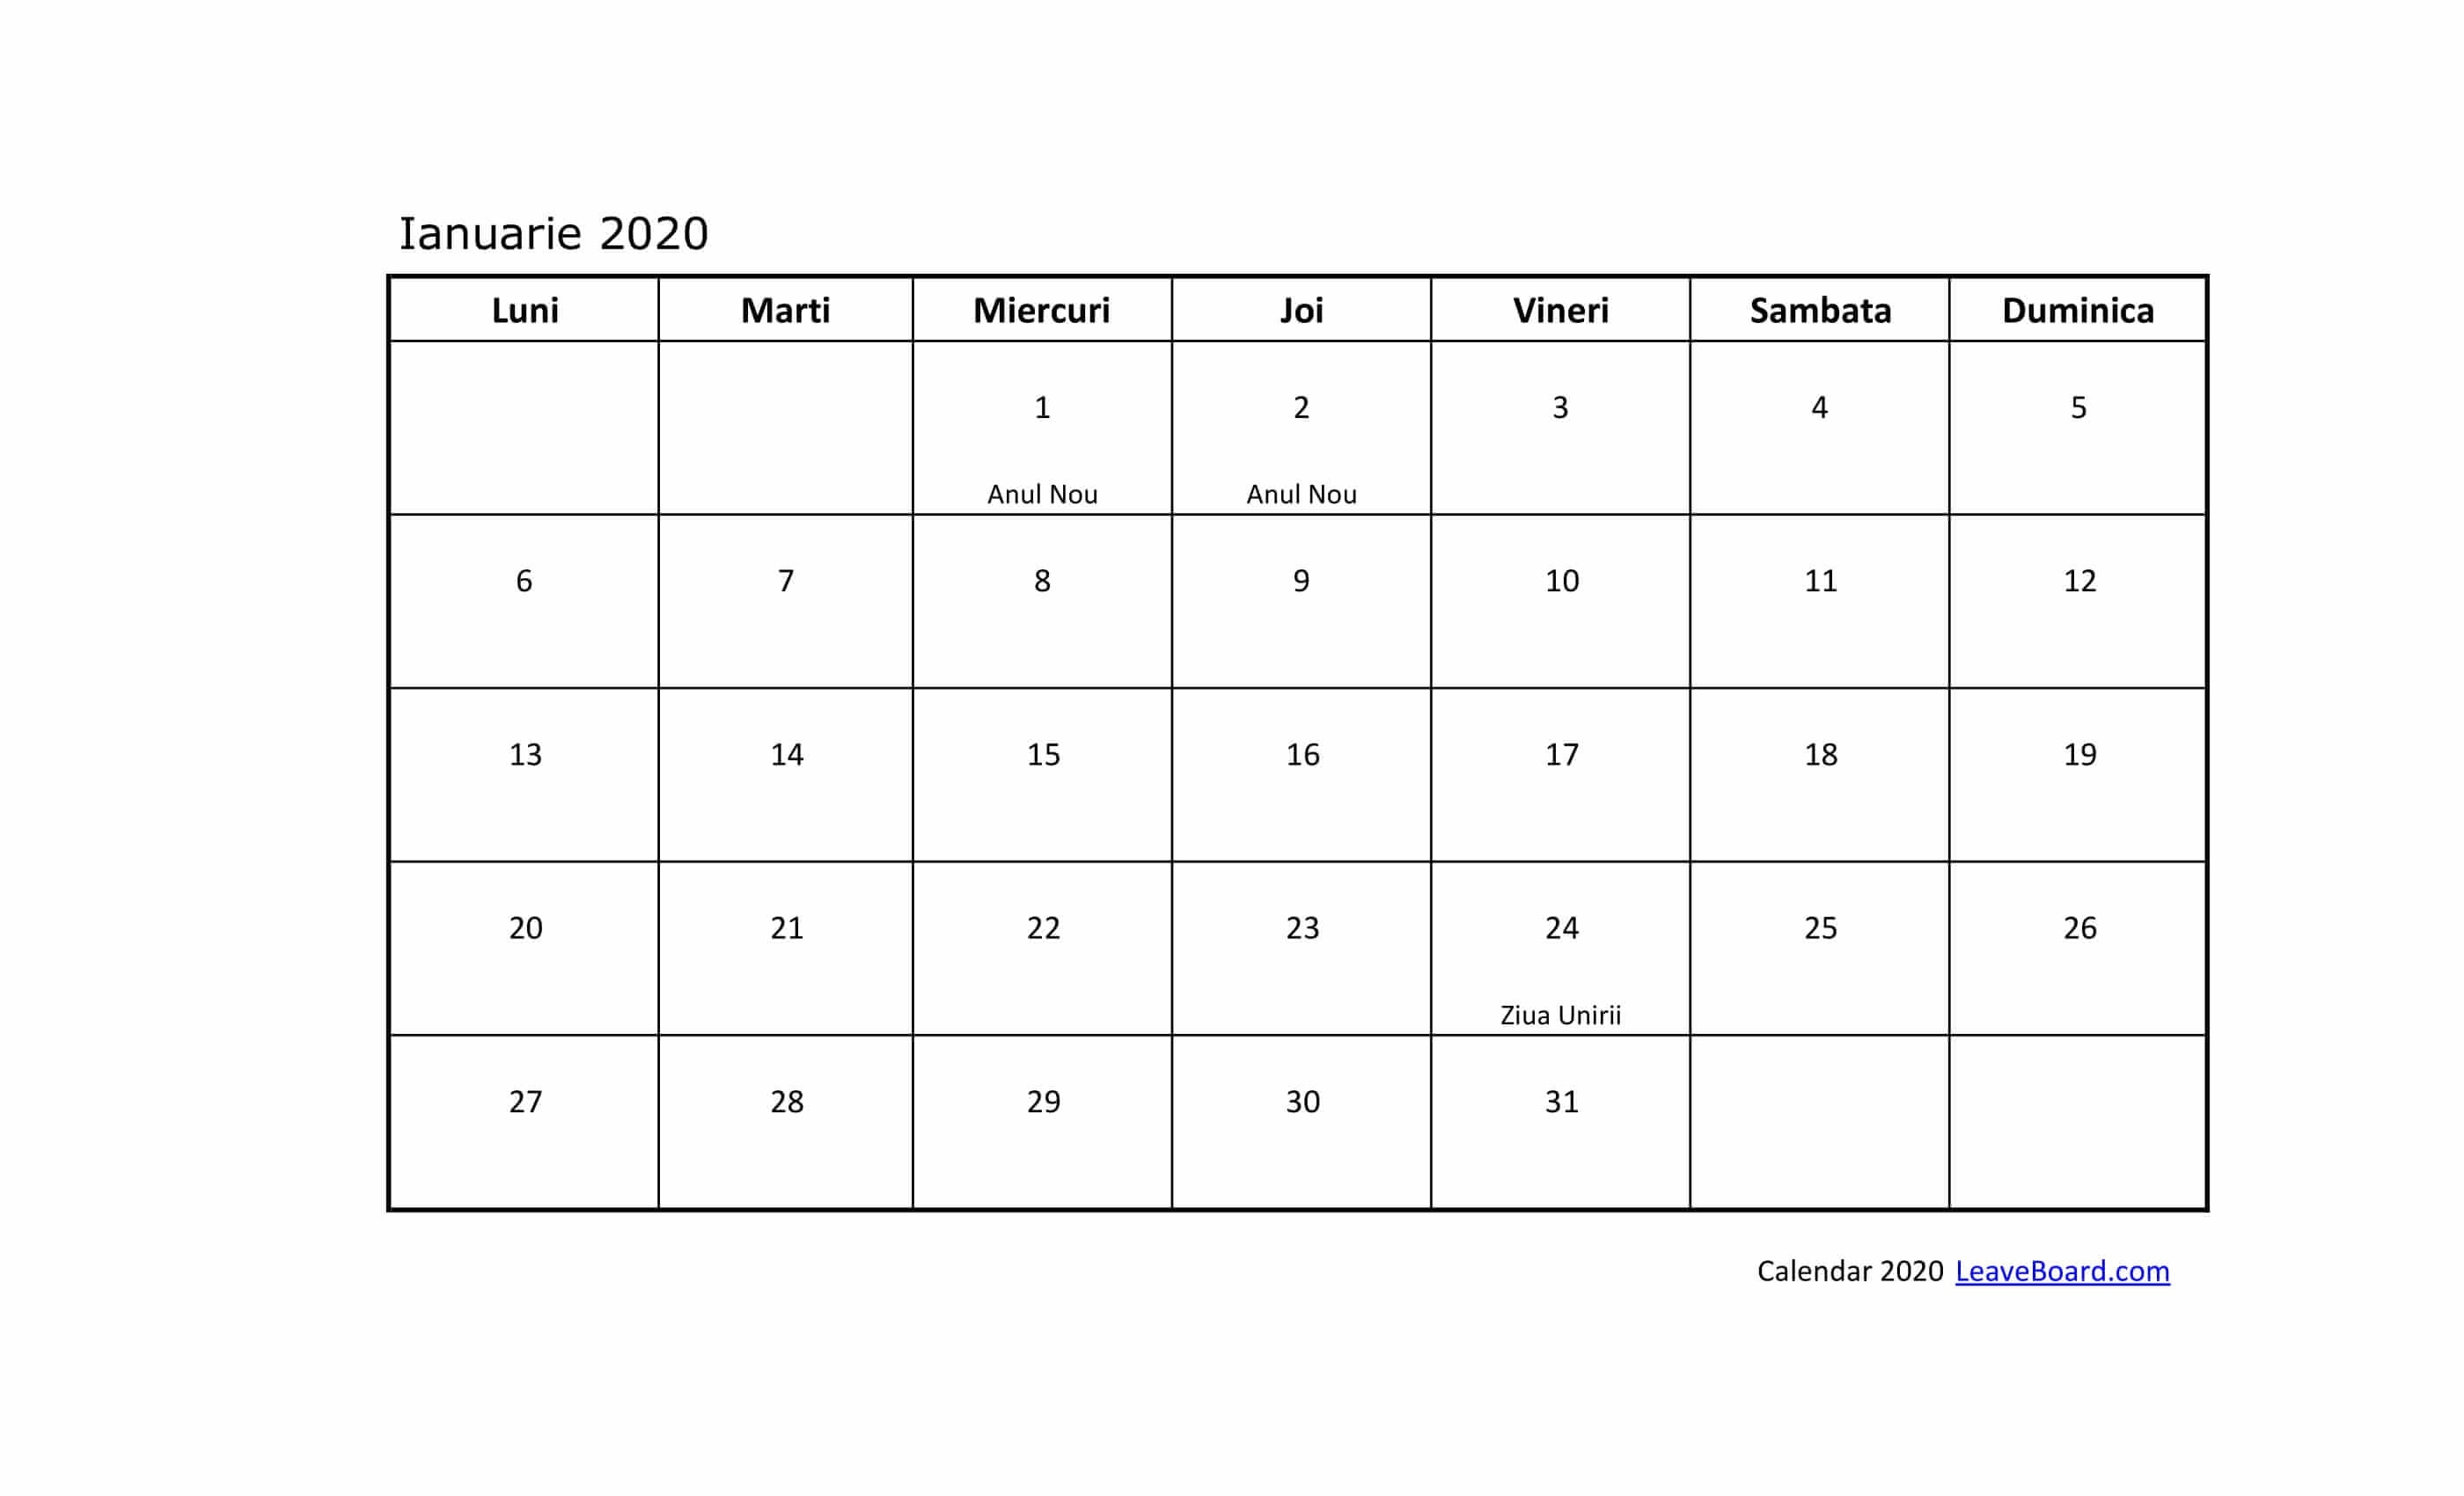 Calendar 2020 | Leaveboard Calendar 2020 In Limba Romana